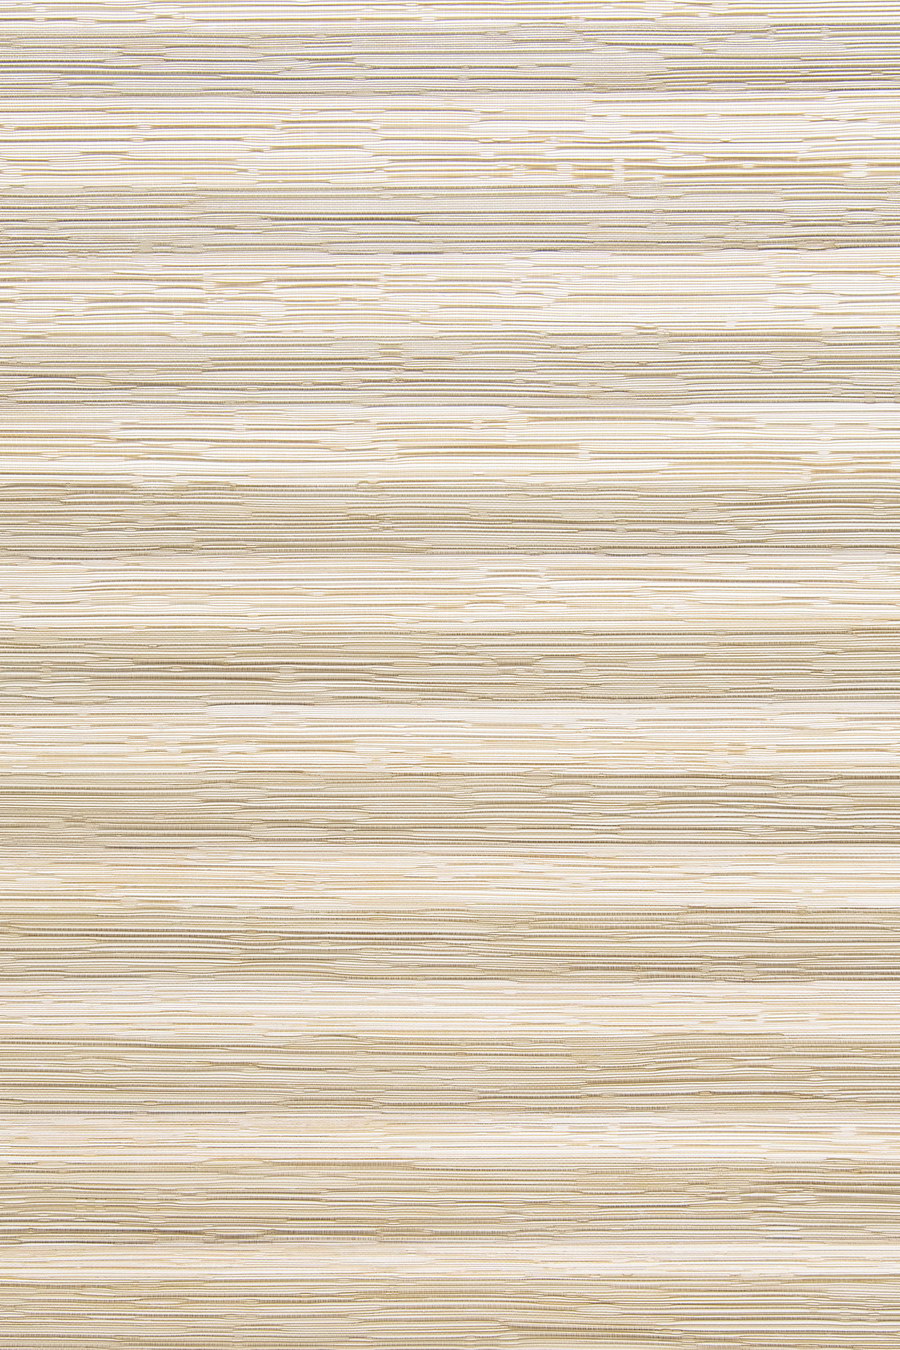 Ткань MIRROR cream-wood 30091 для штор плиссе